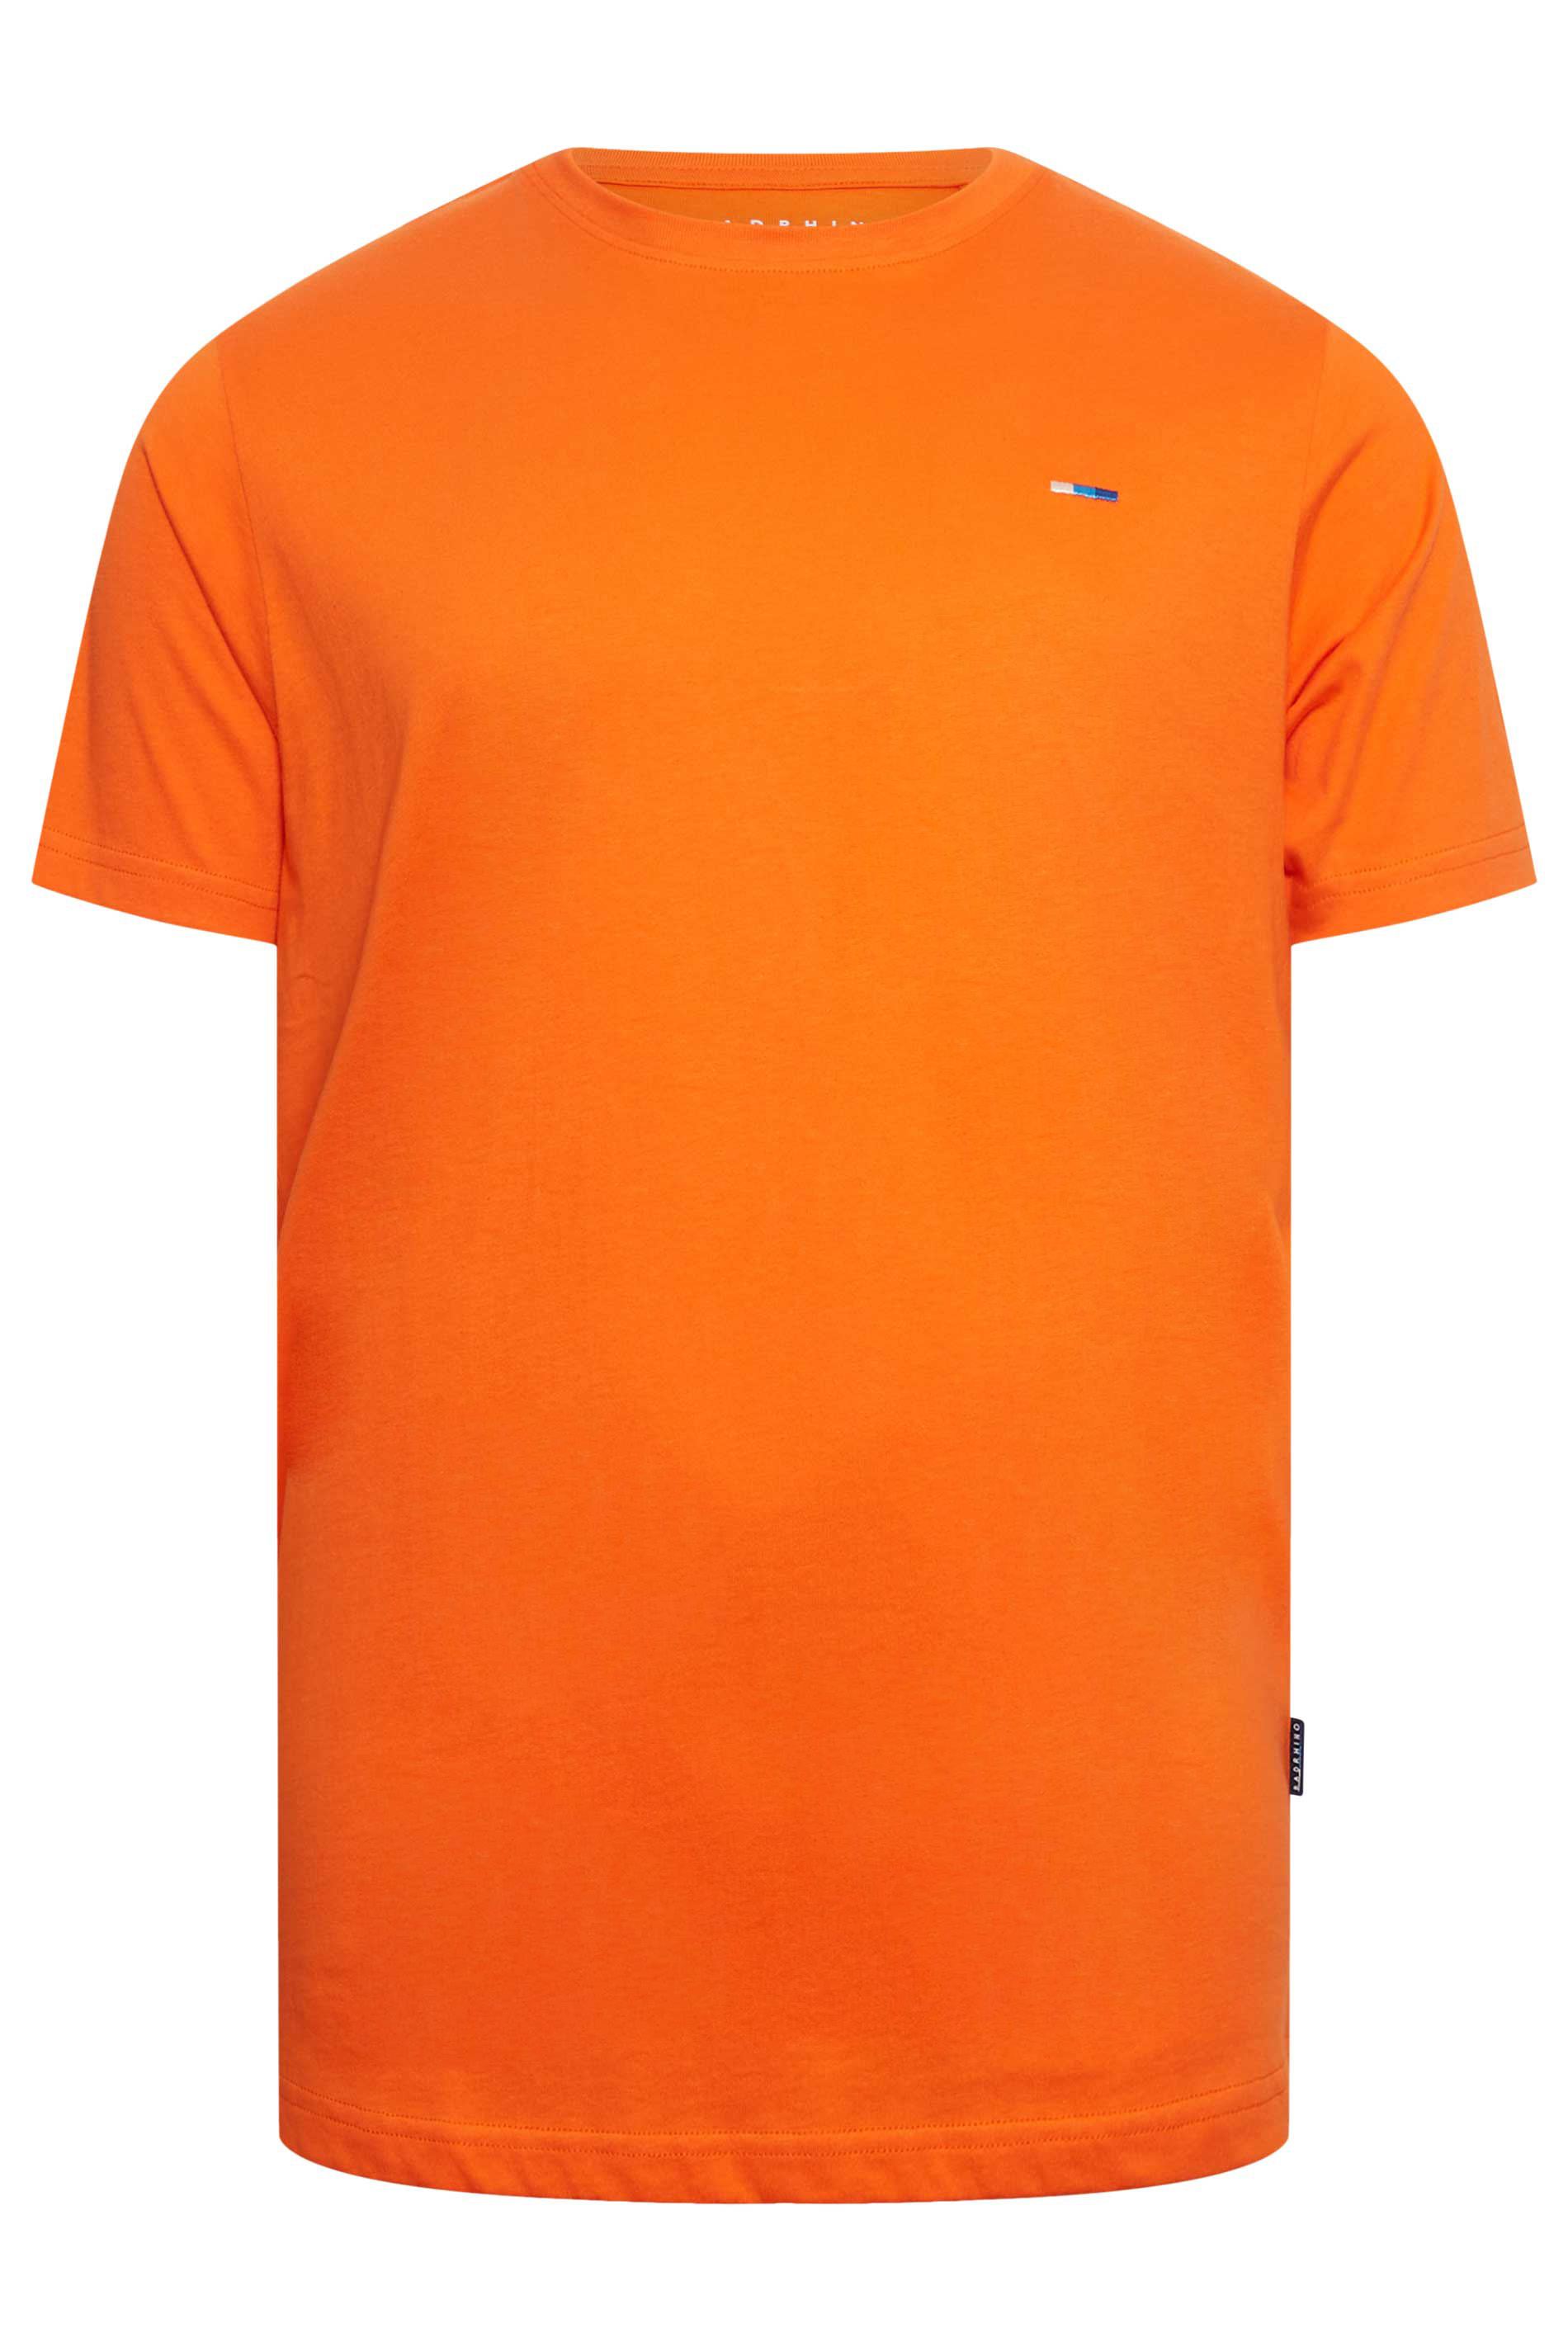 BadRhino Big & Tall Orange 5 Pack Essential T-Shirts | BadRhino